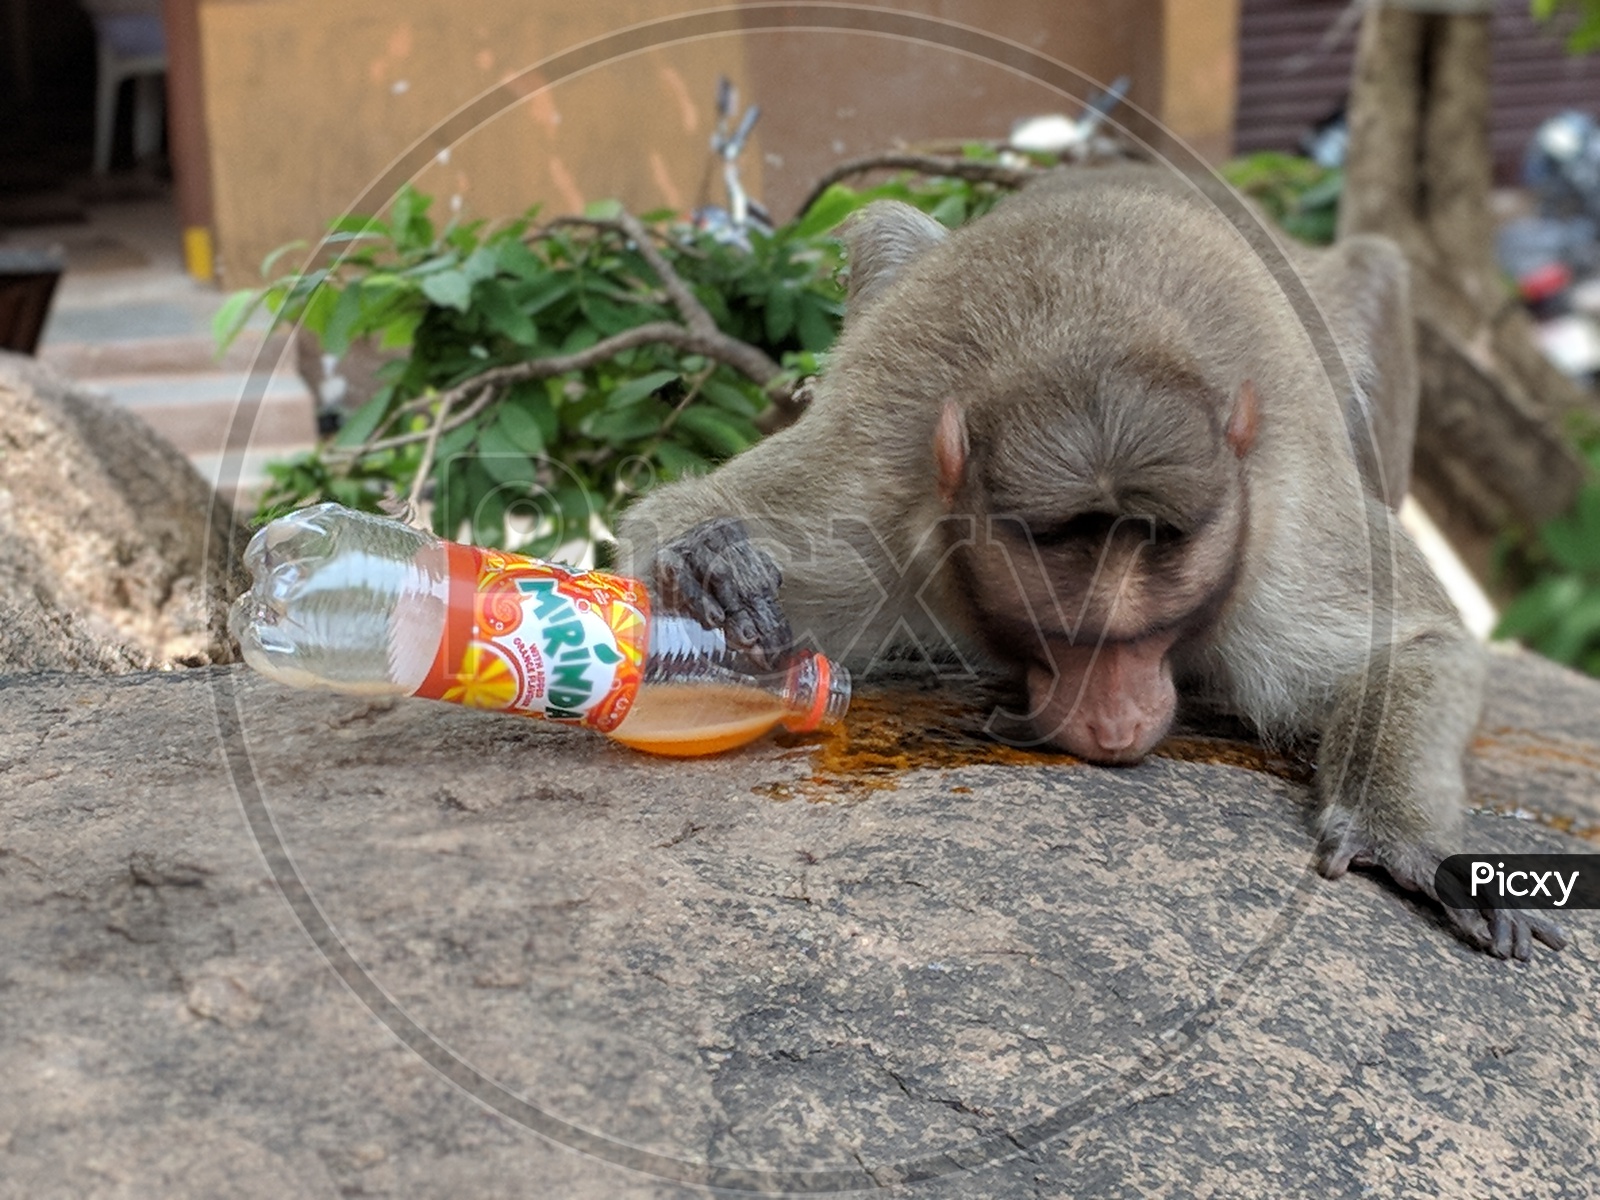 A monkey drinking Mirinda in hot summer afternoon.